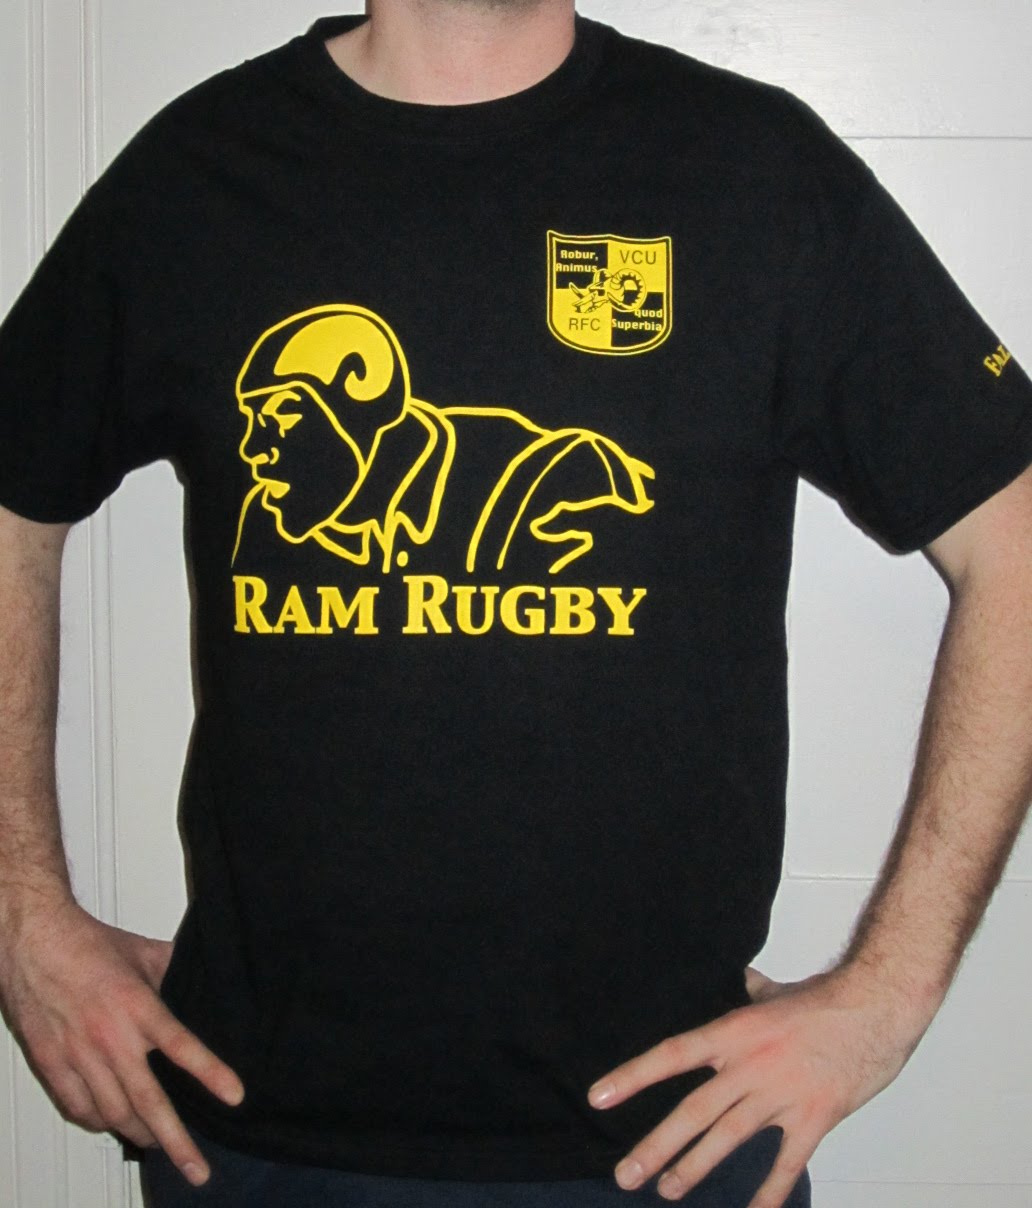 Erek Jones Illustration: Design for VCU Rugby Shirt